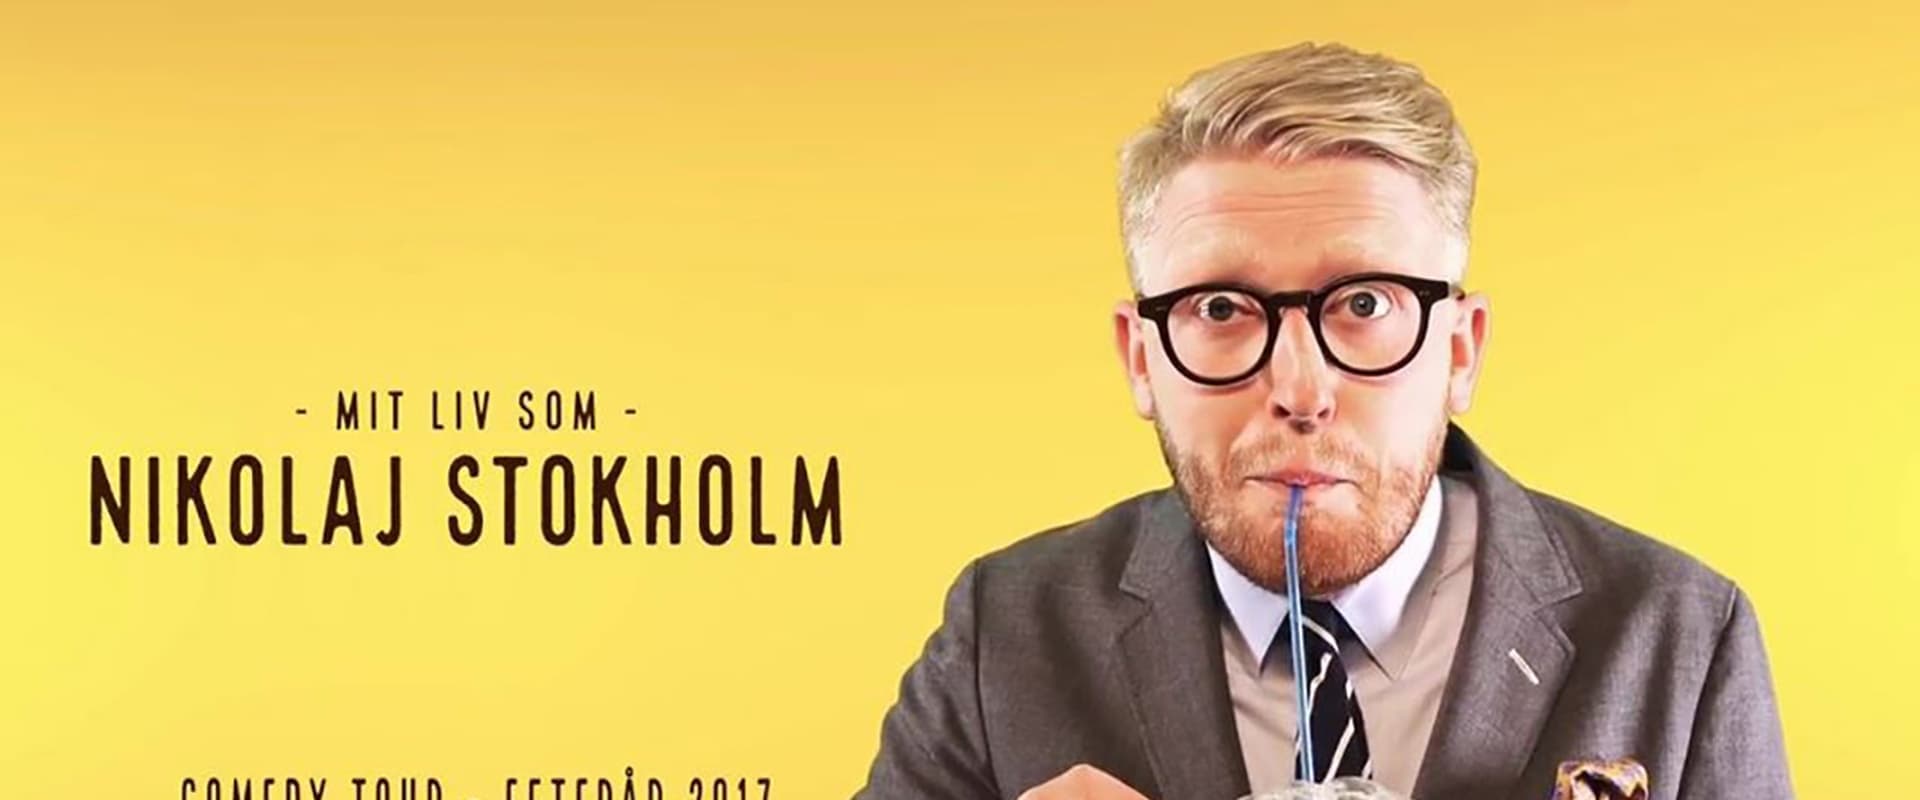 Nikolaj Stokholm: Mit Liv som Nikolaj Stokholm